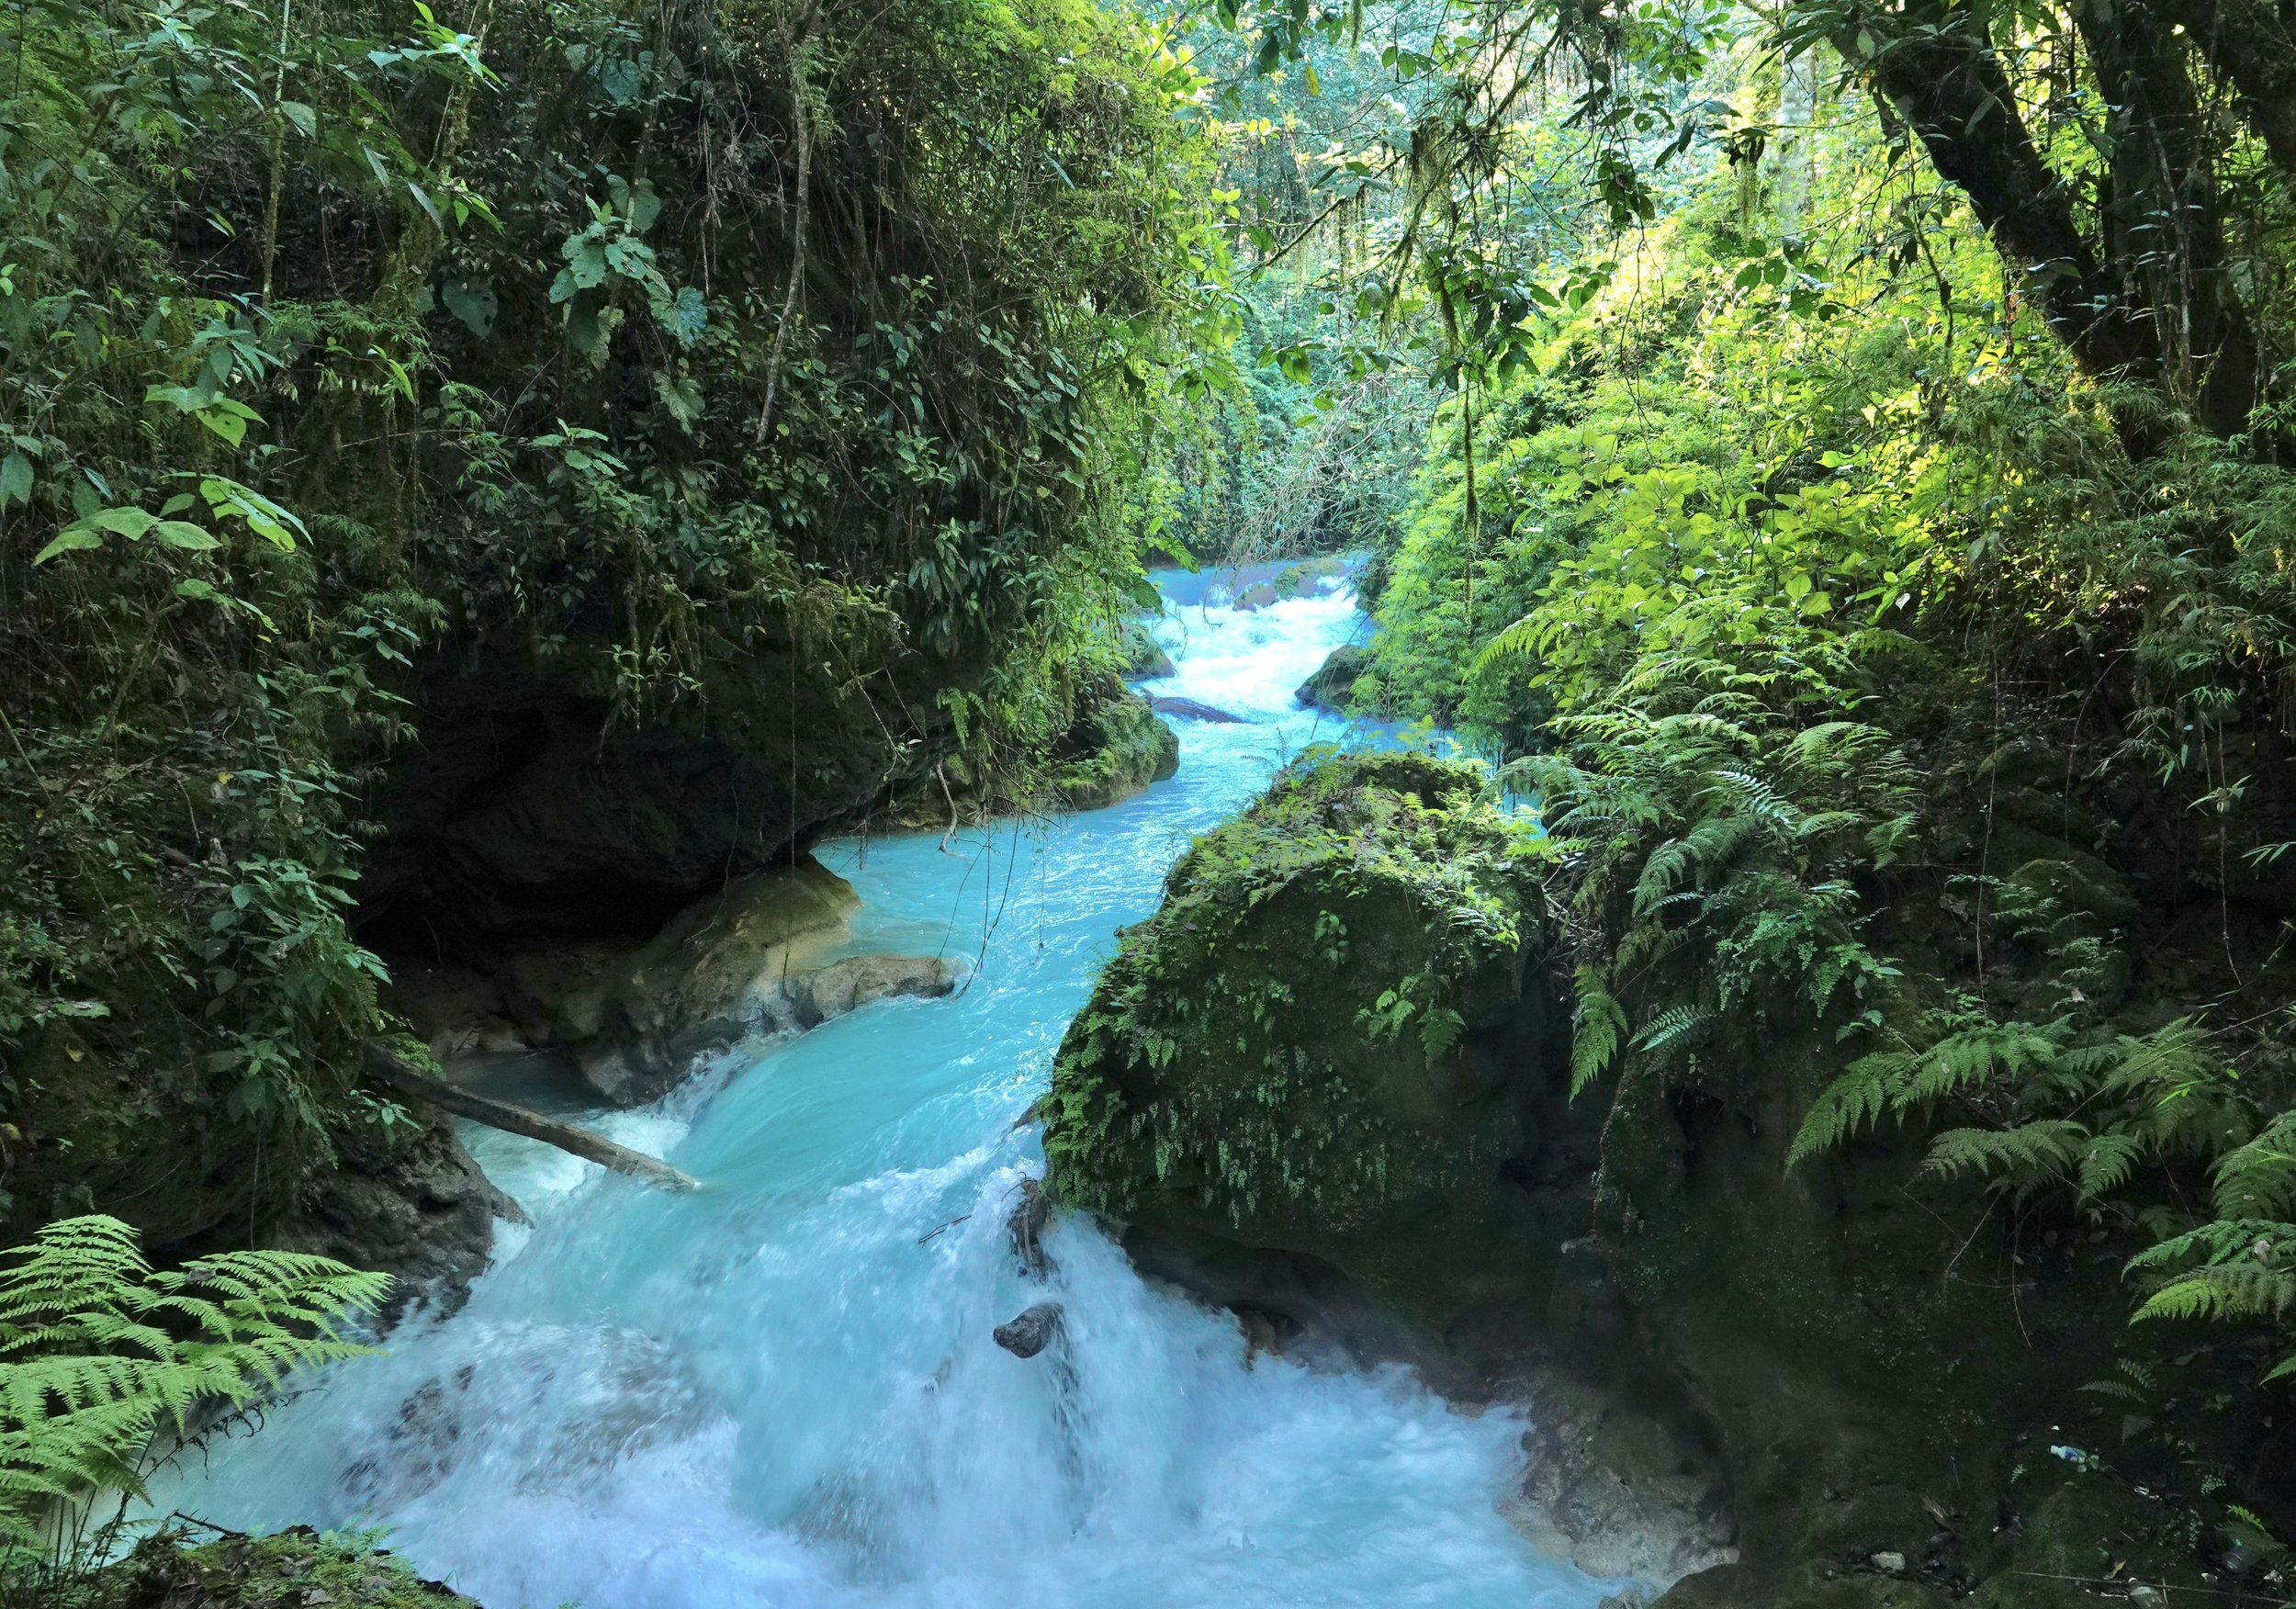  Cloud forest blue water stream flowing over ancient limestone, Huehuetenango Department, Guatemala. Image: ©J. Vannini 